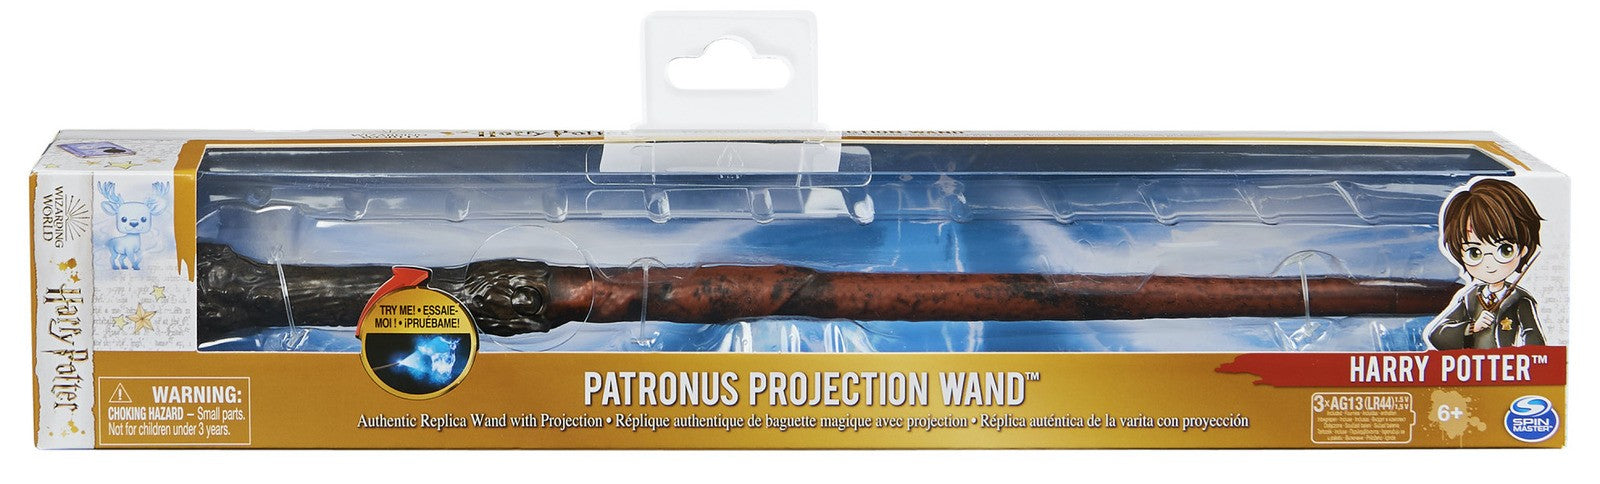 Harry Potter patronus projection wand 